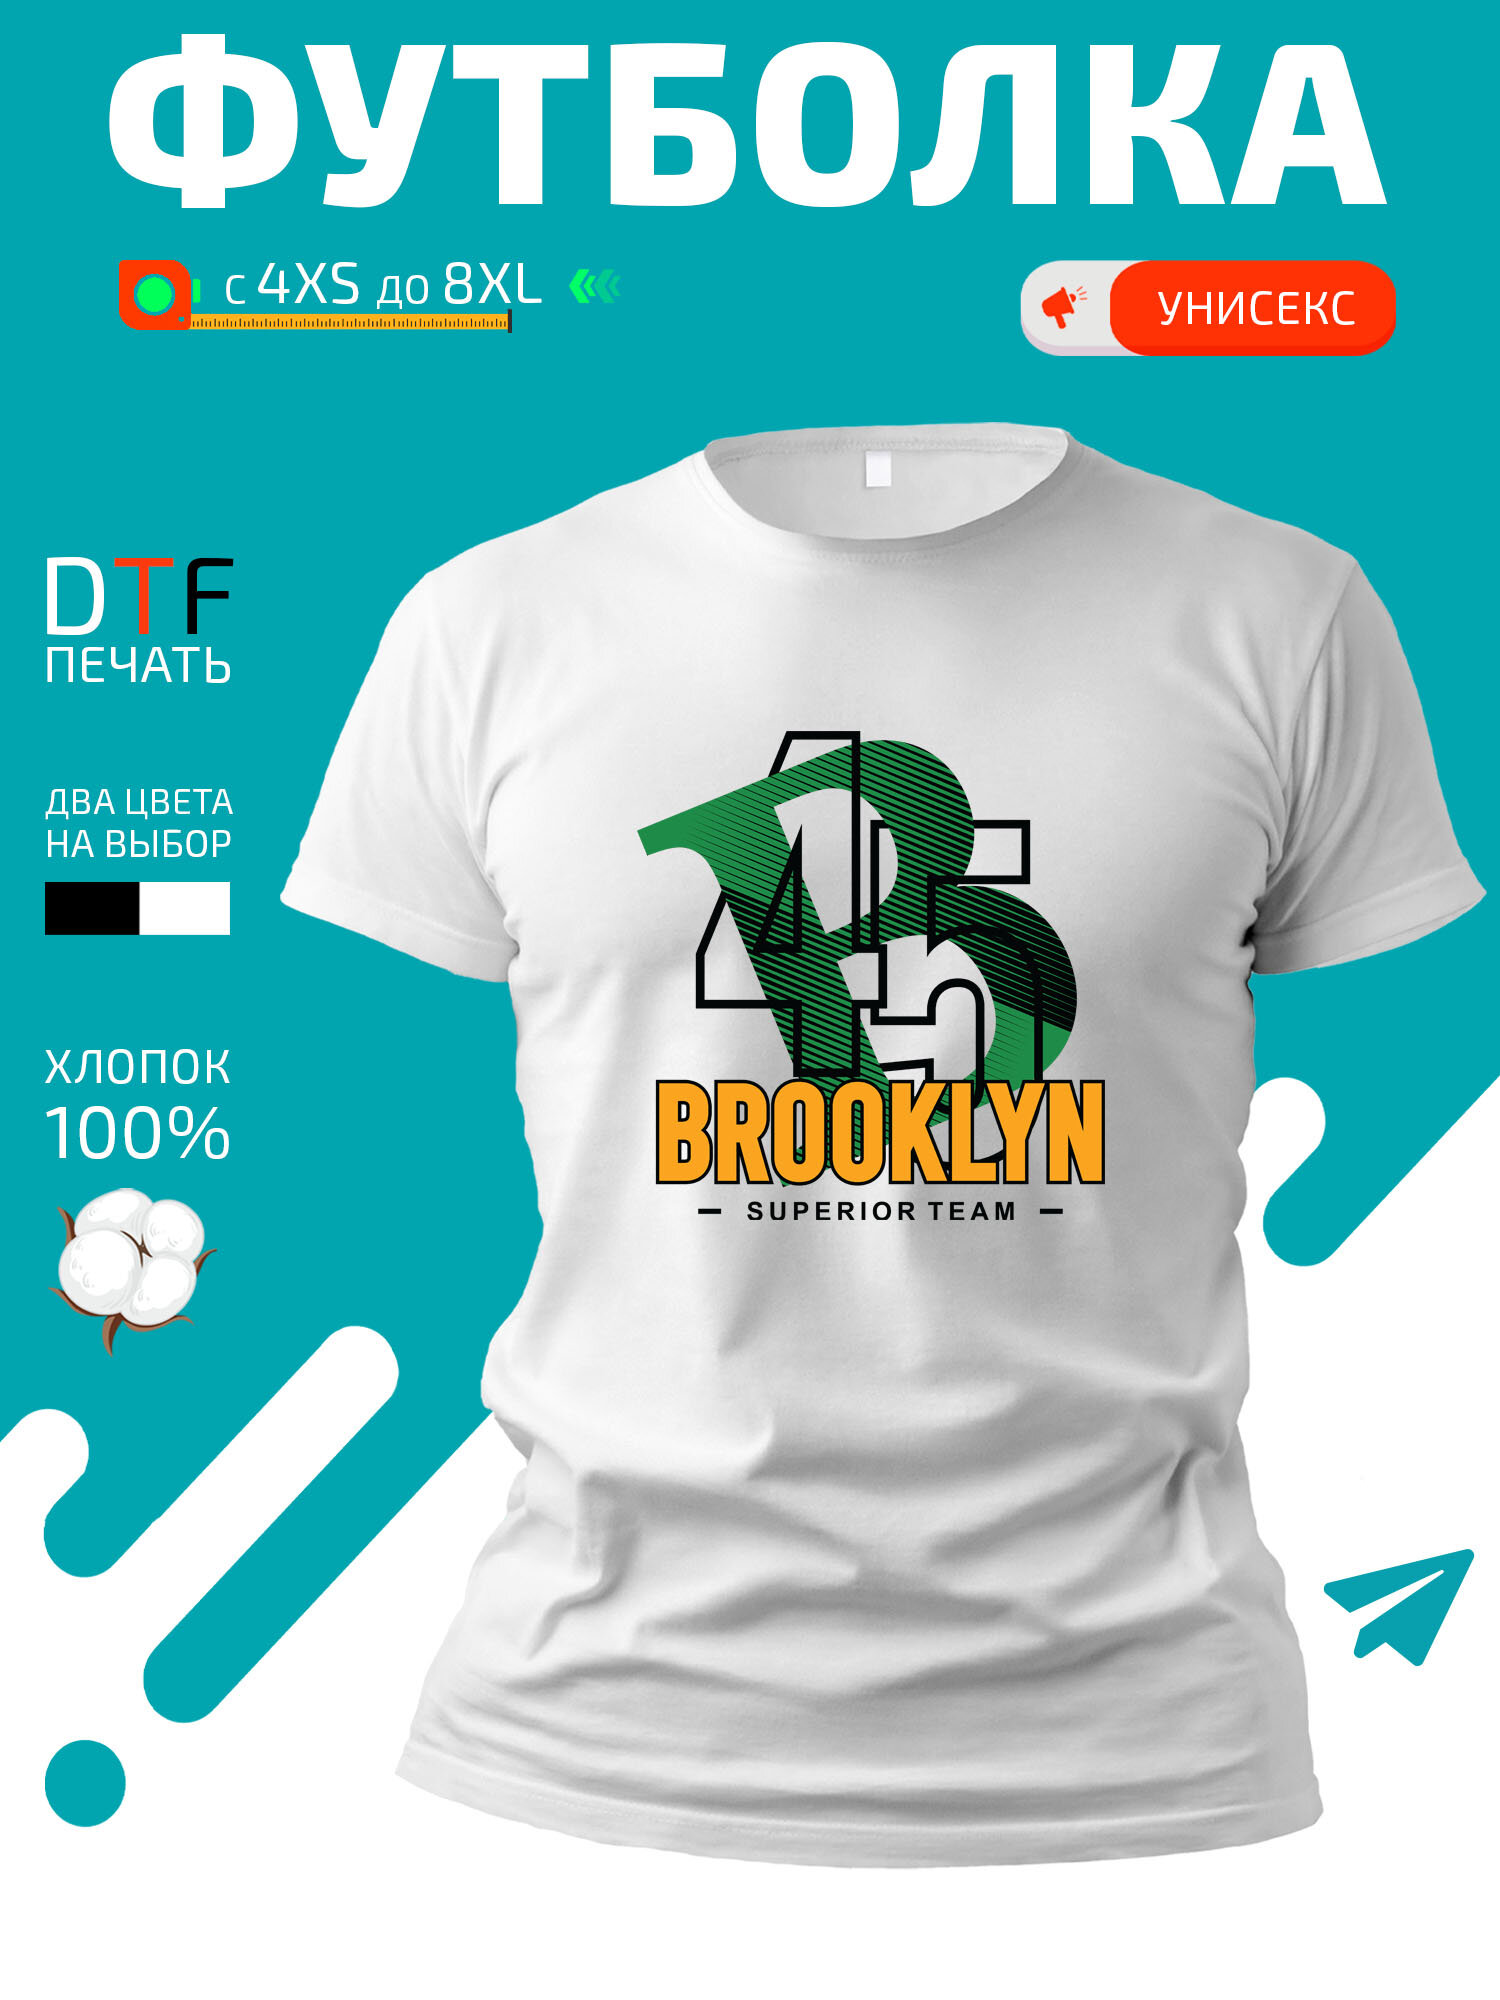 Футболка Brooklyn superior B 45 team-Бруклин превосходная команда